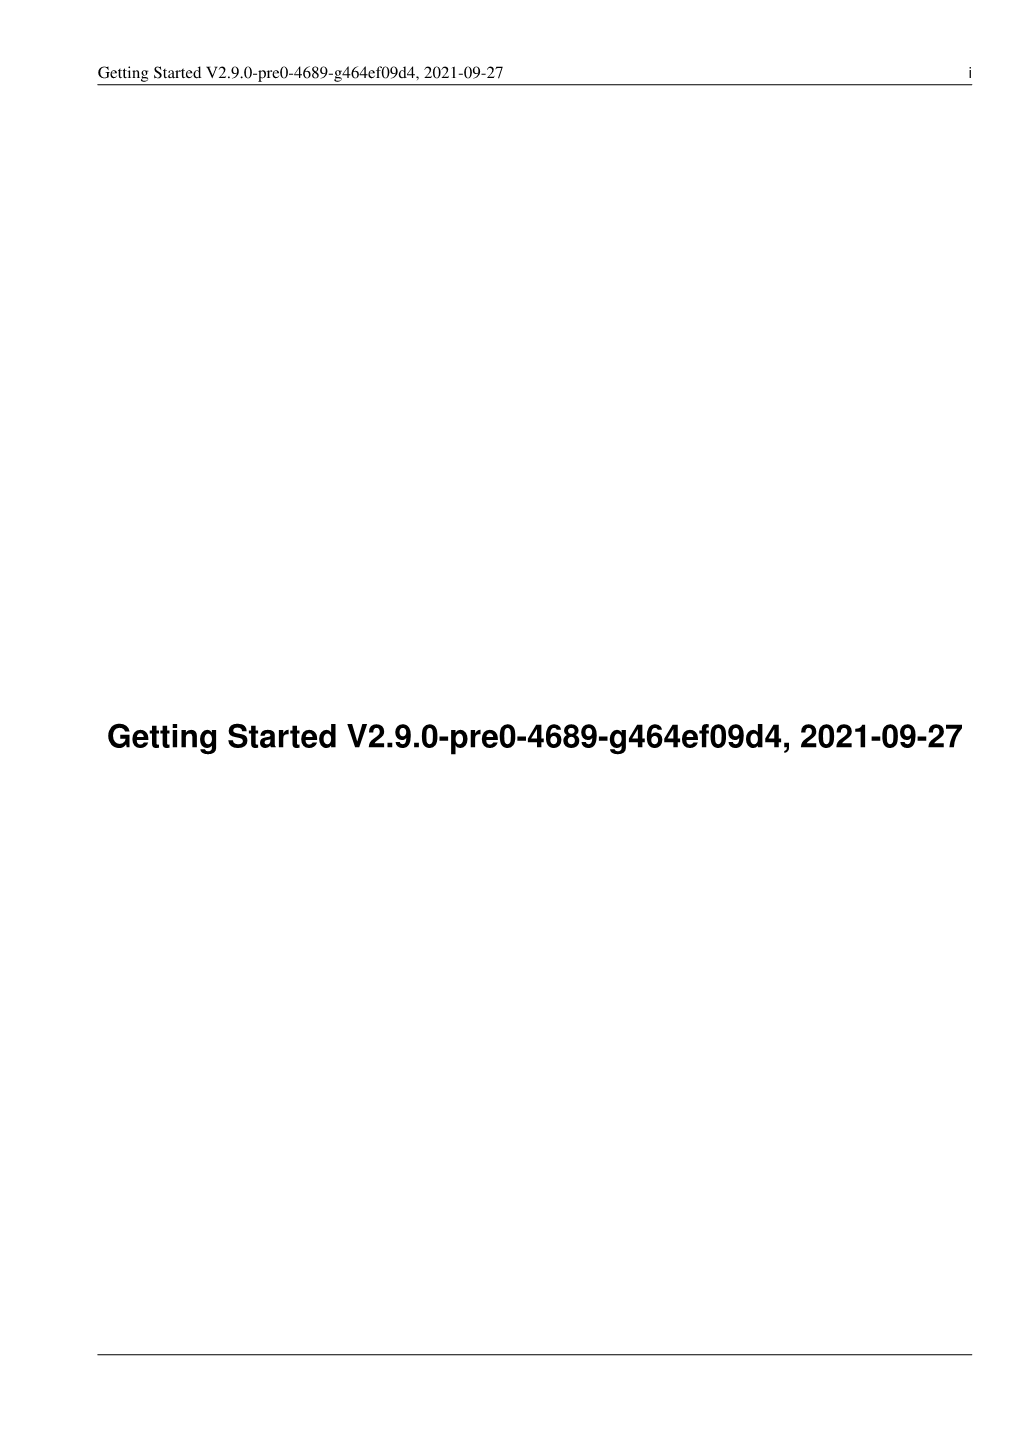 Getting Started V2.9.0-Pre0-4551